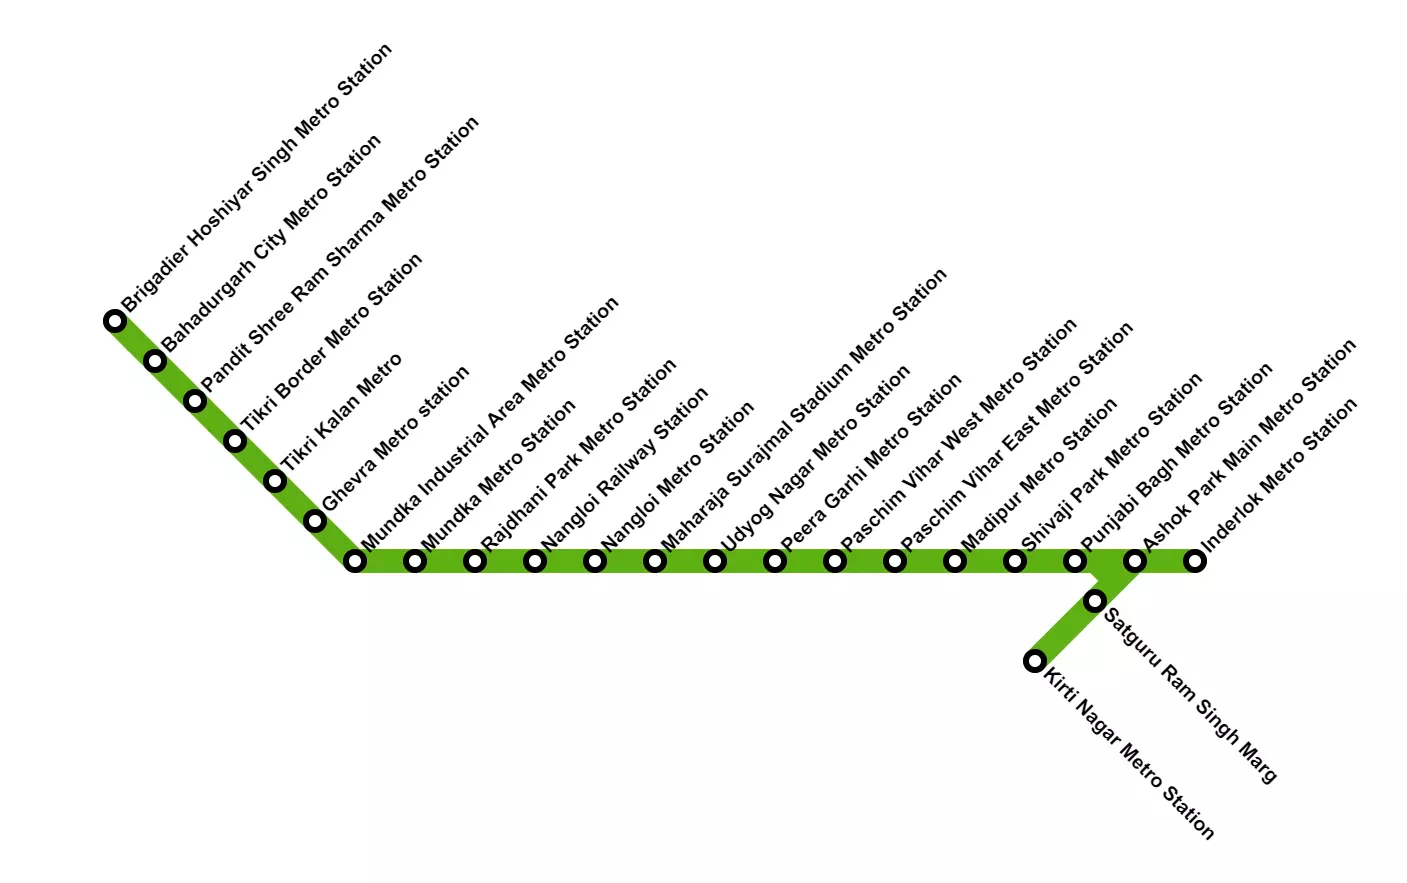 Delhi metro map download